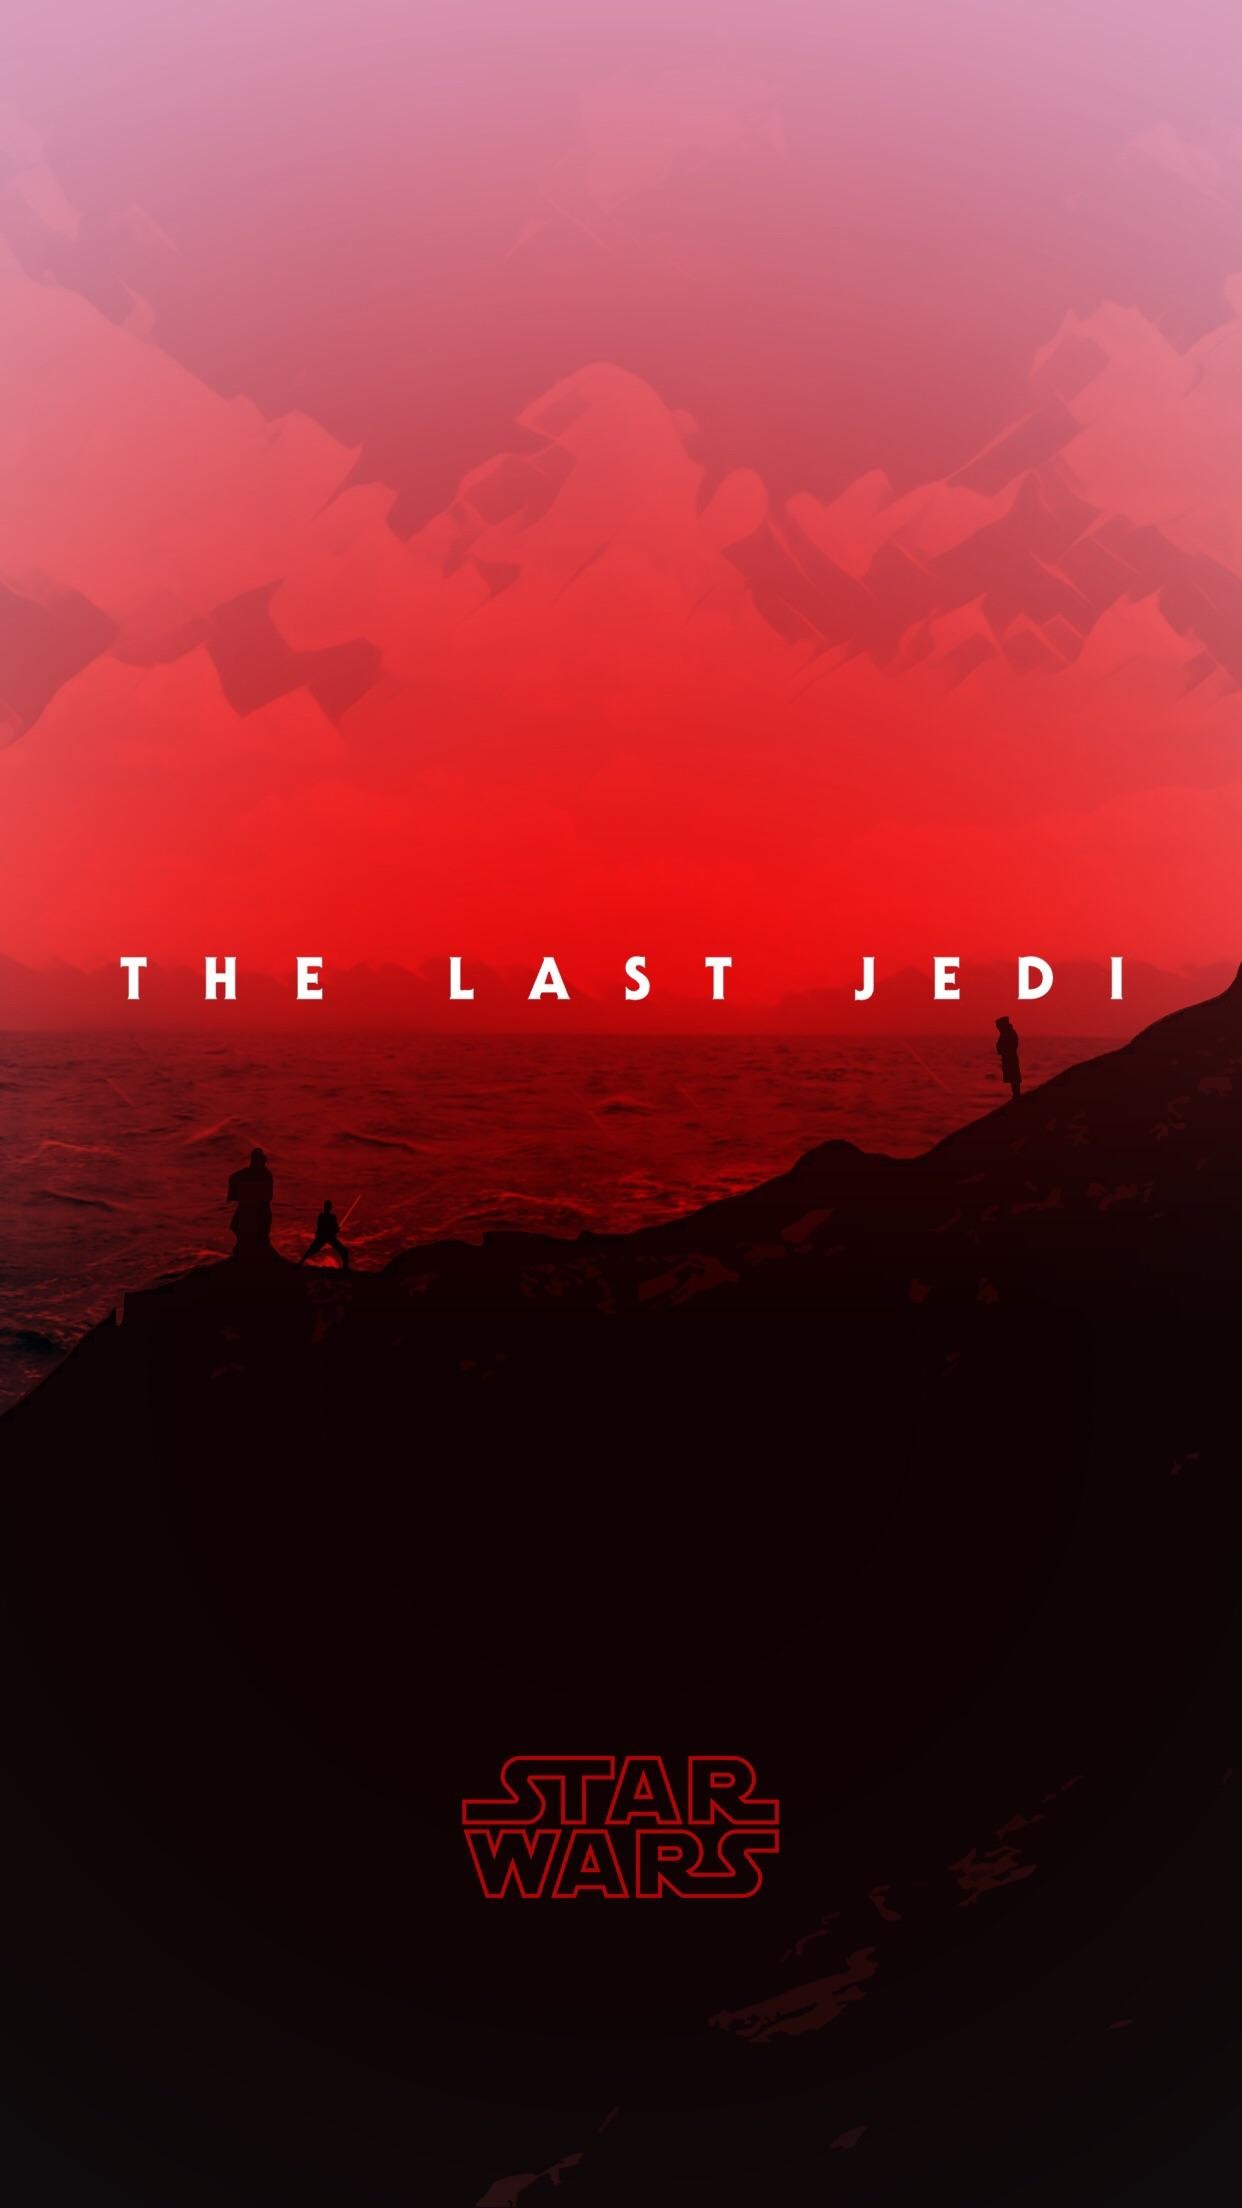 Star Wars: The Last Jedi (2017) HD Wallpaper From Gallsource.com